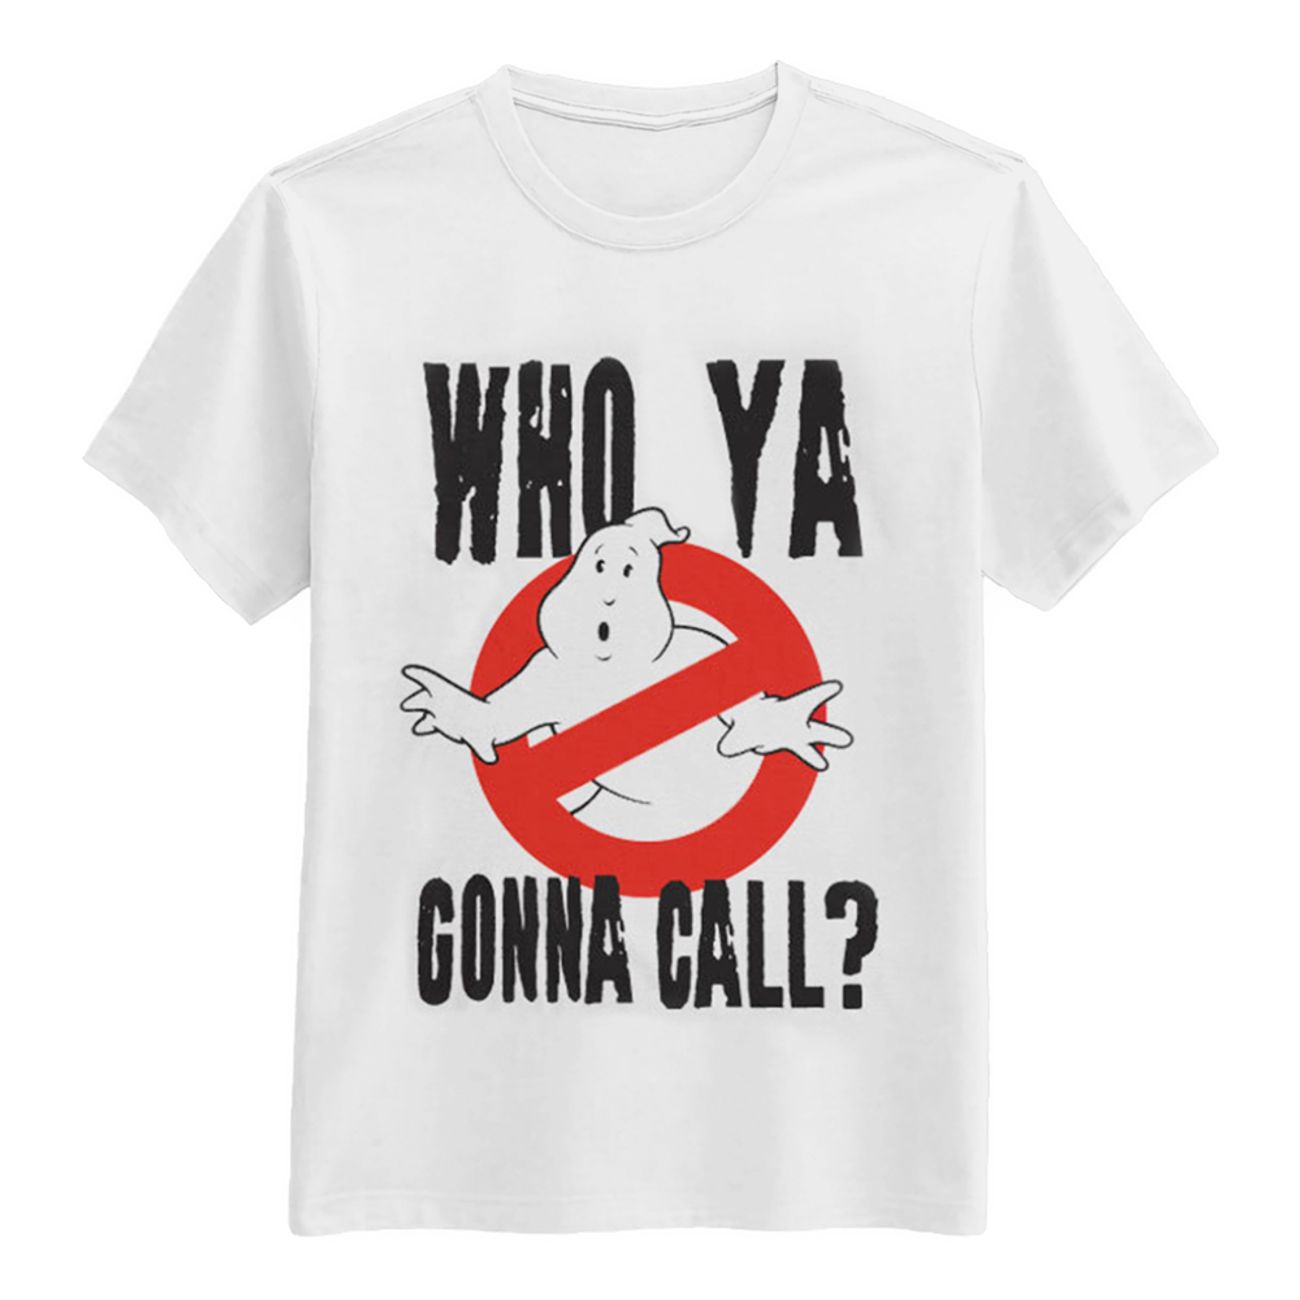 who-ya-gonna-call-t-shirt-2